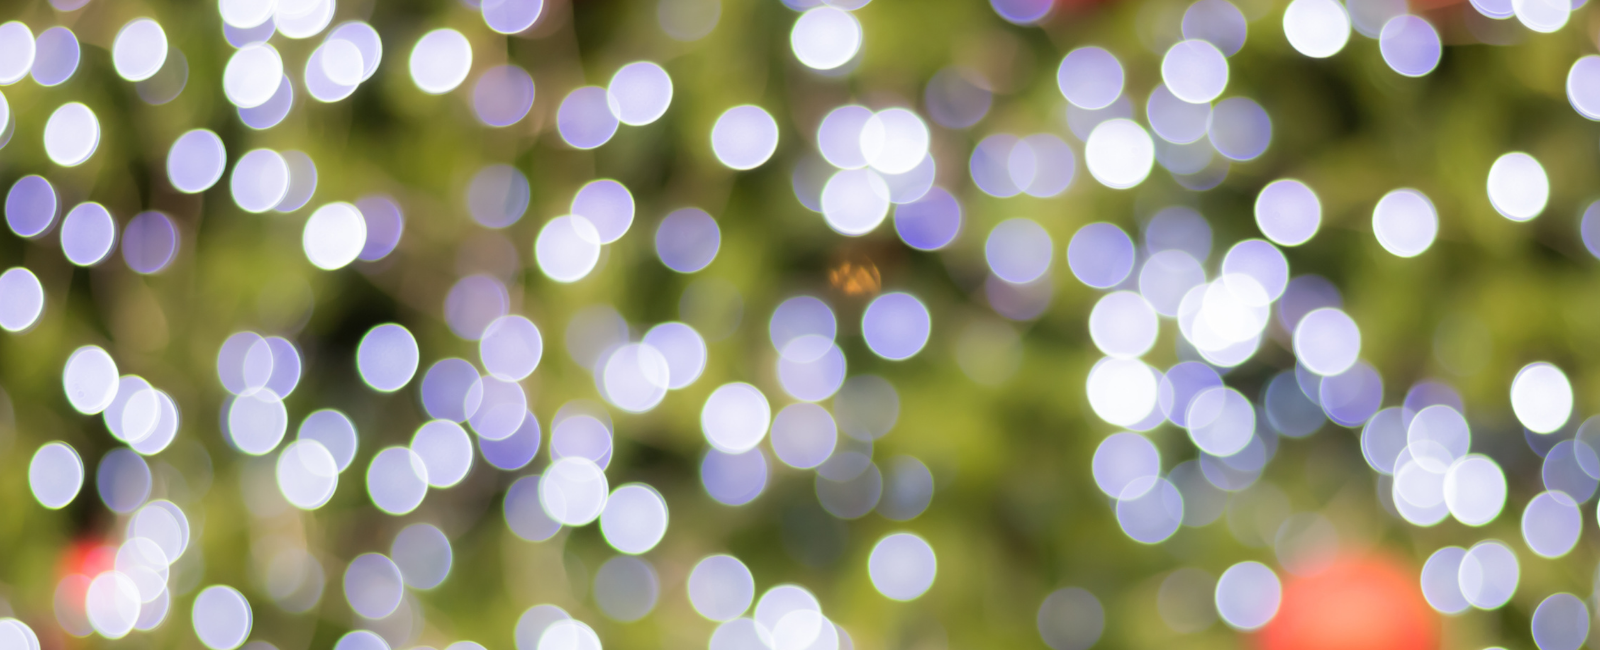 photo of blurred Christmas lights